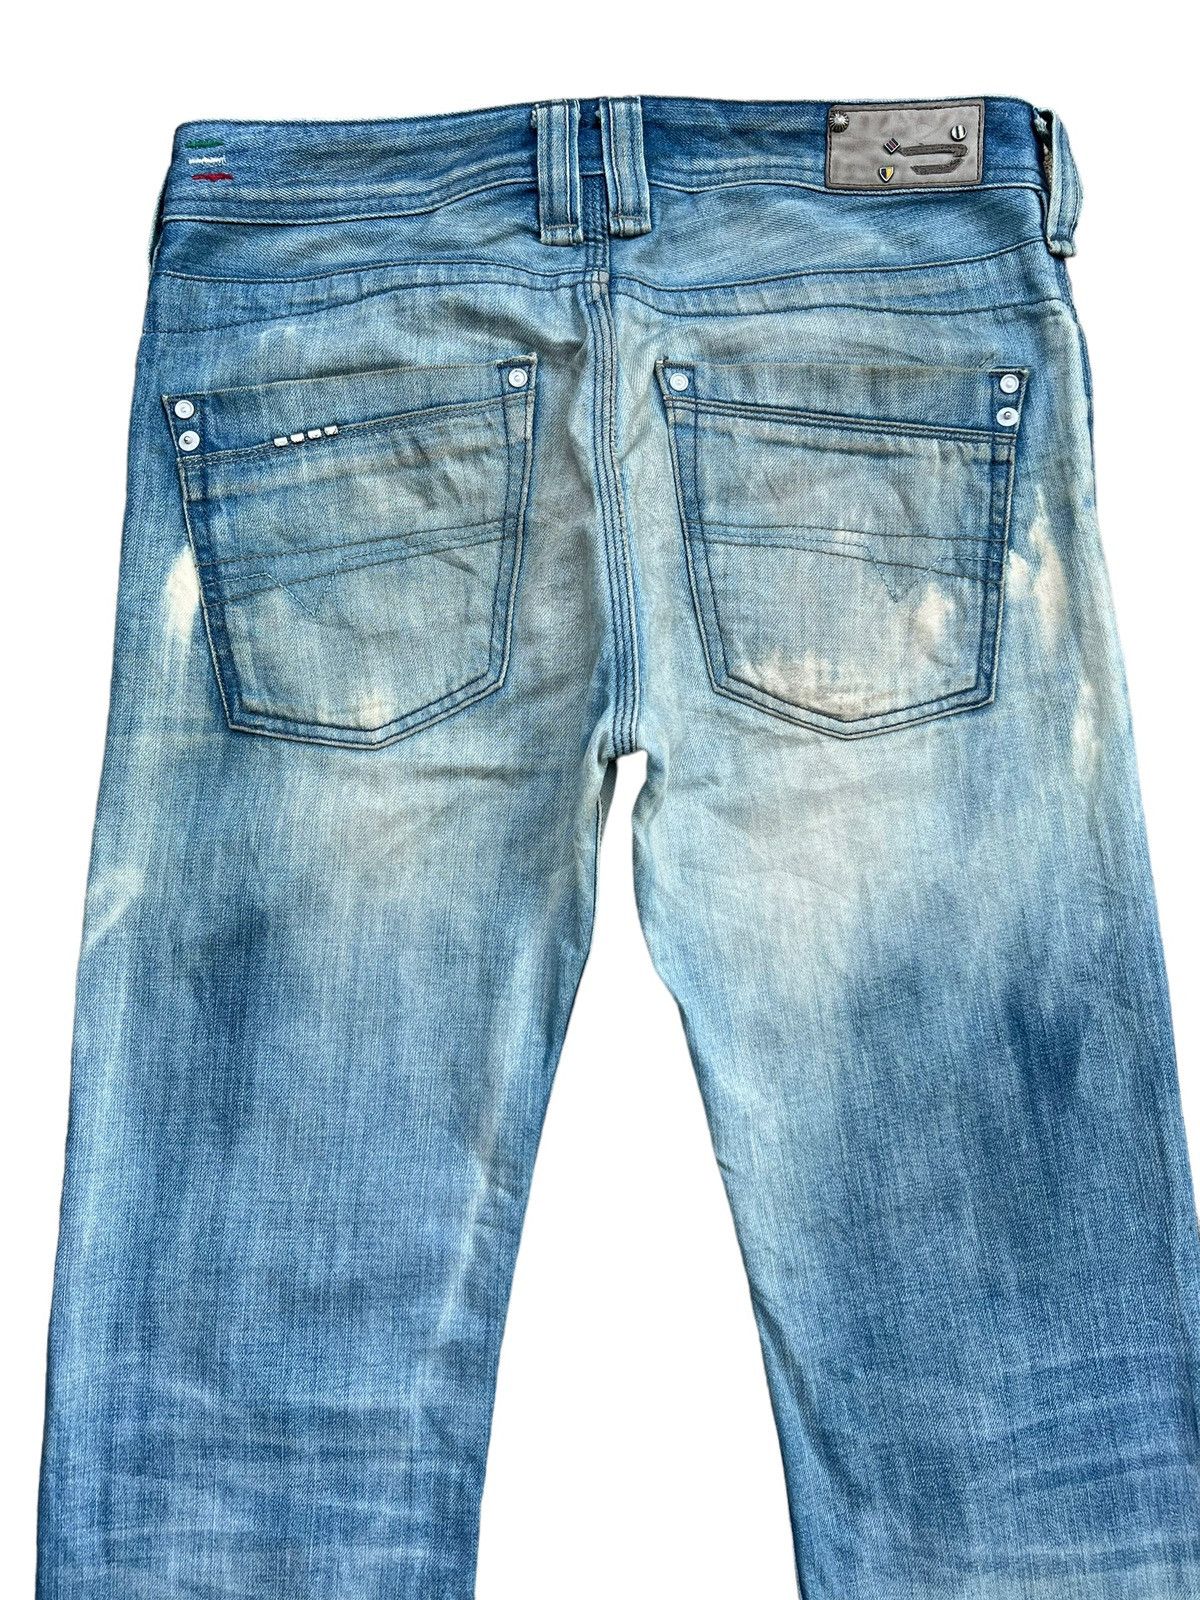 Vintage Diesel Leather Faded Distressed Denim Jeans 32x31 - 5